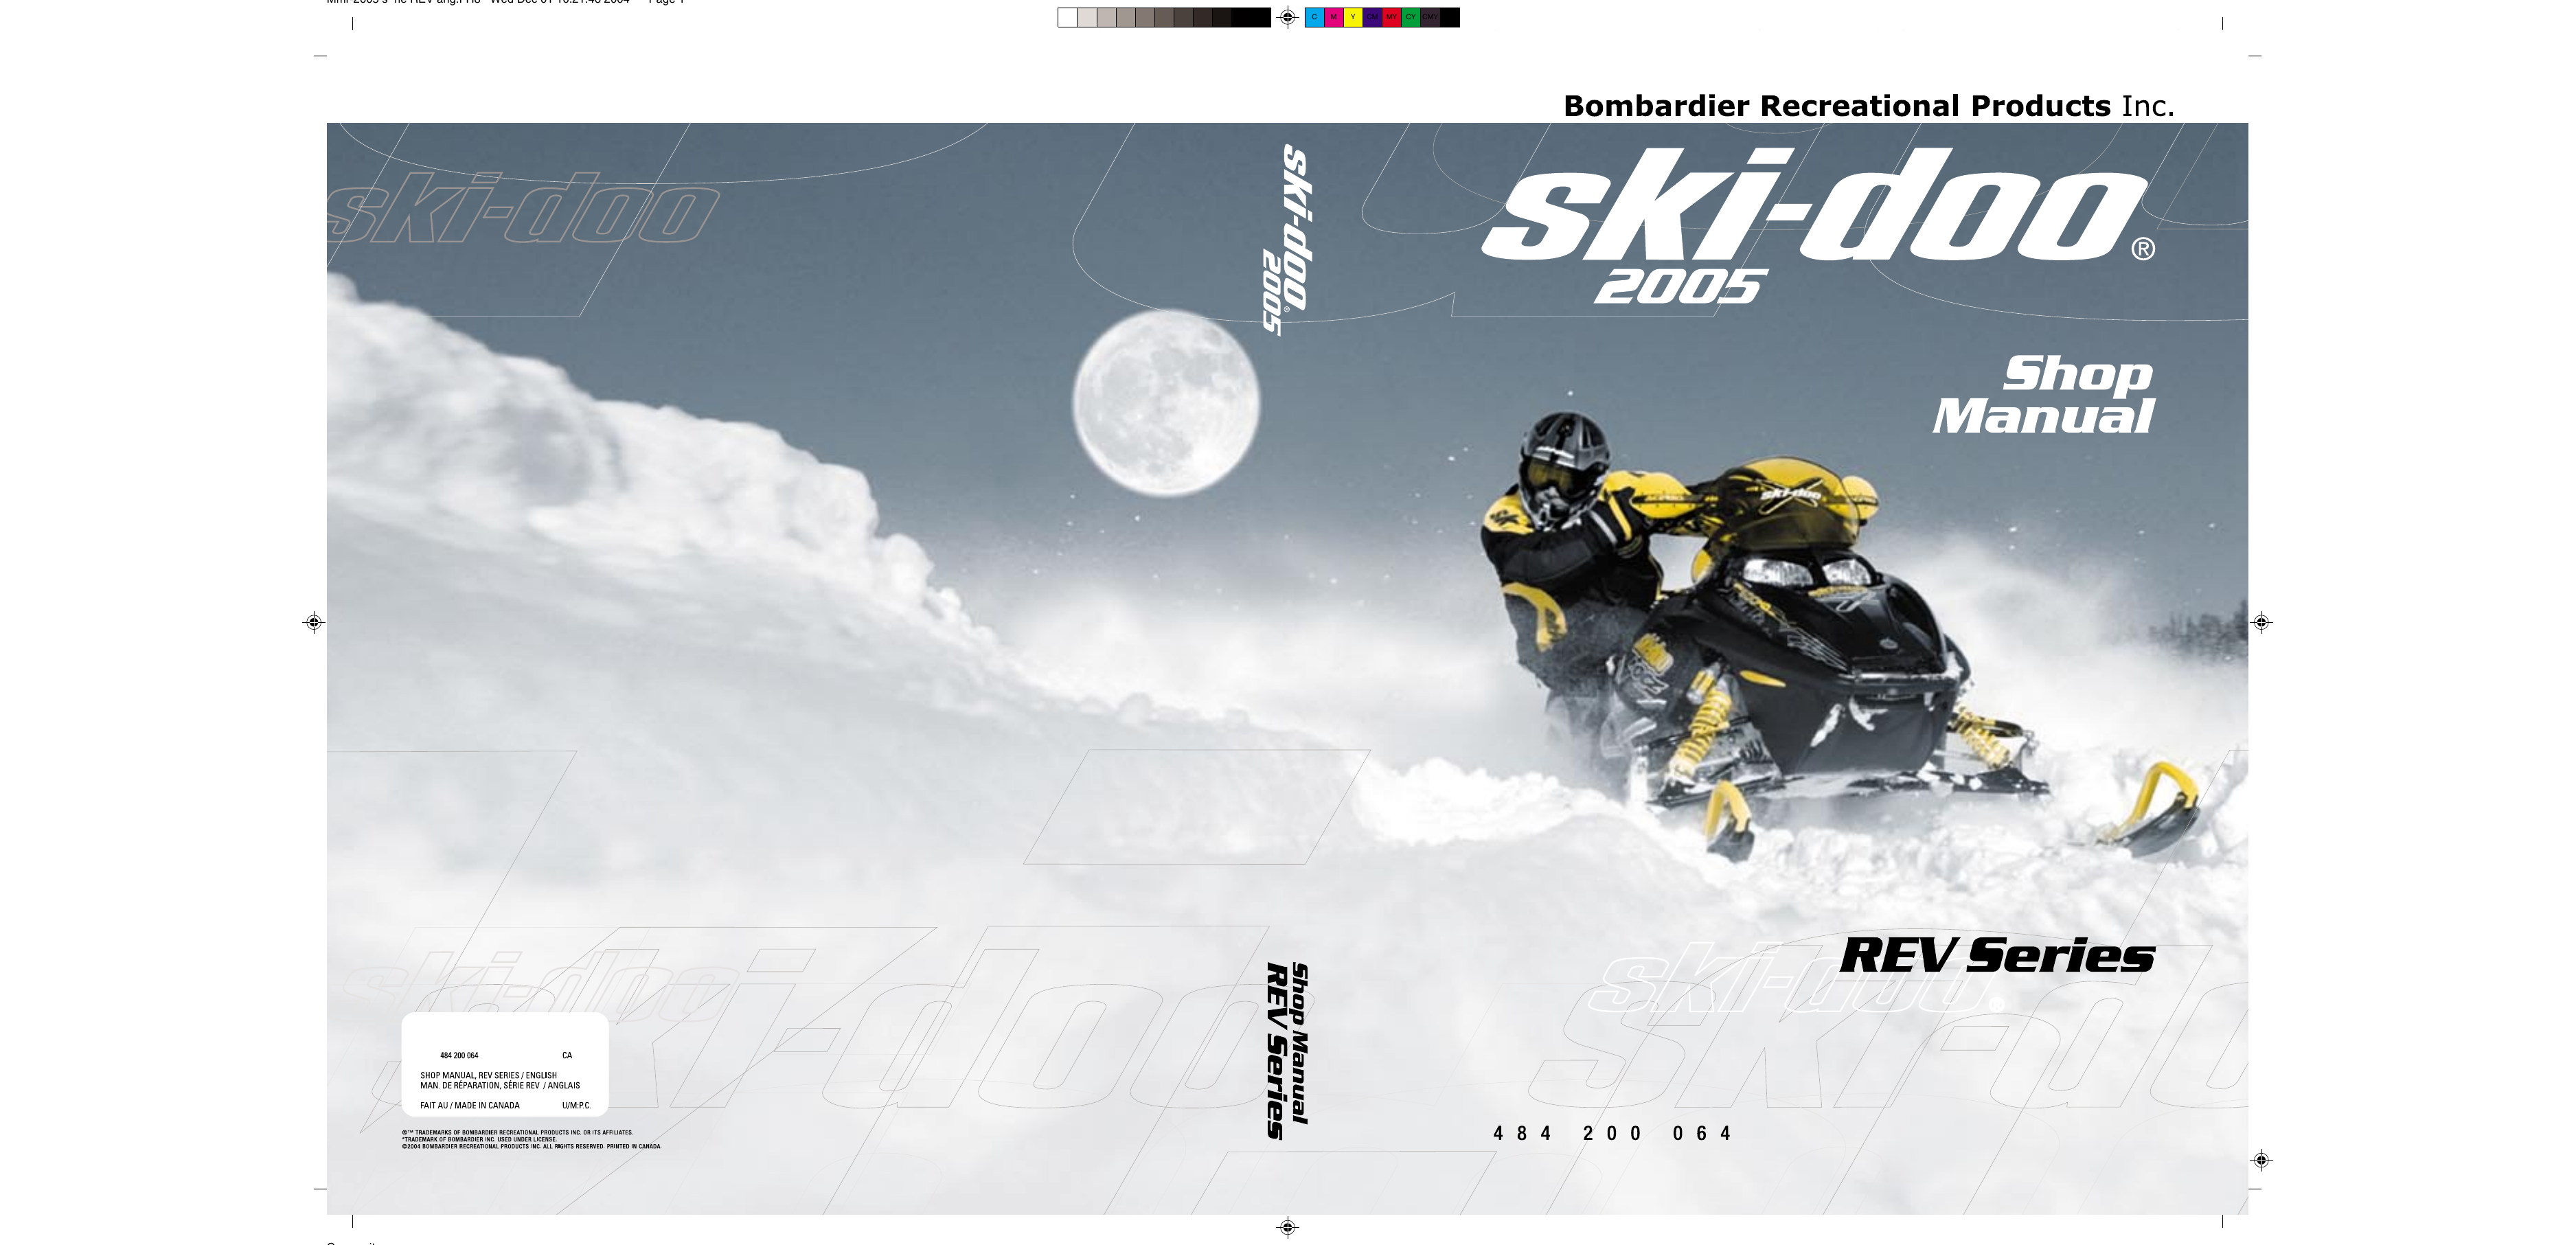 2005 Bombardier Ski-Doo REV snowmobile shop manual Preview image 1